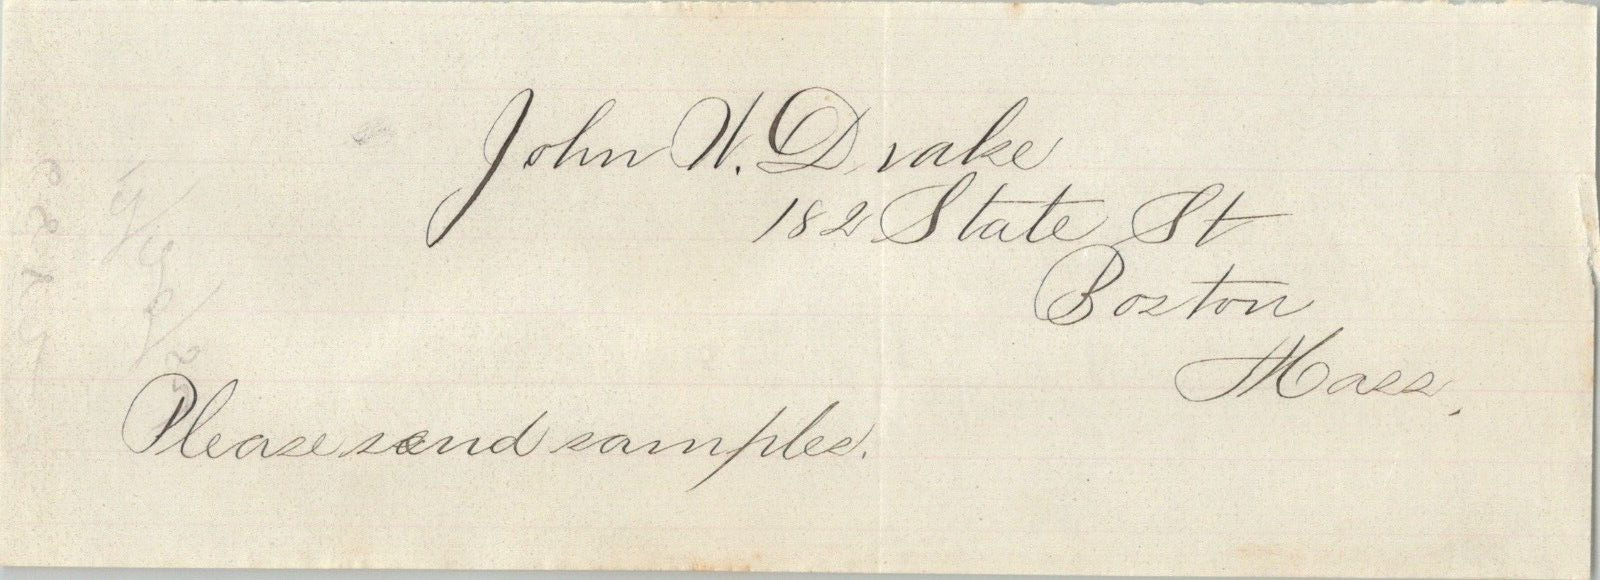 Signature John W Drake Signed Boston Massachusetts 1884 Handwritten to SA Thayer